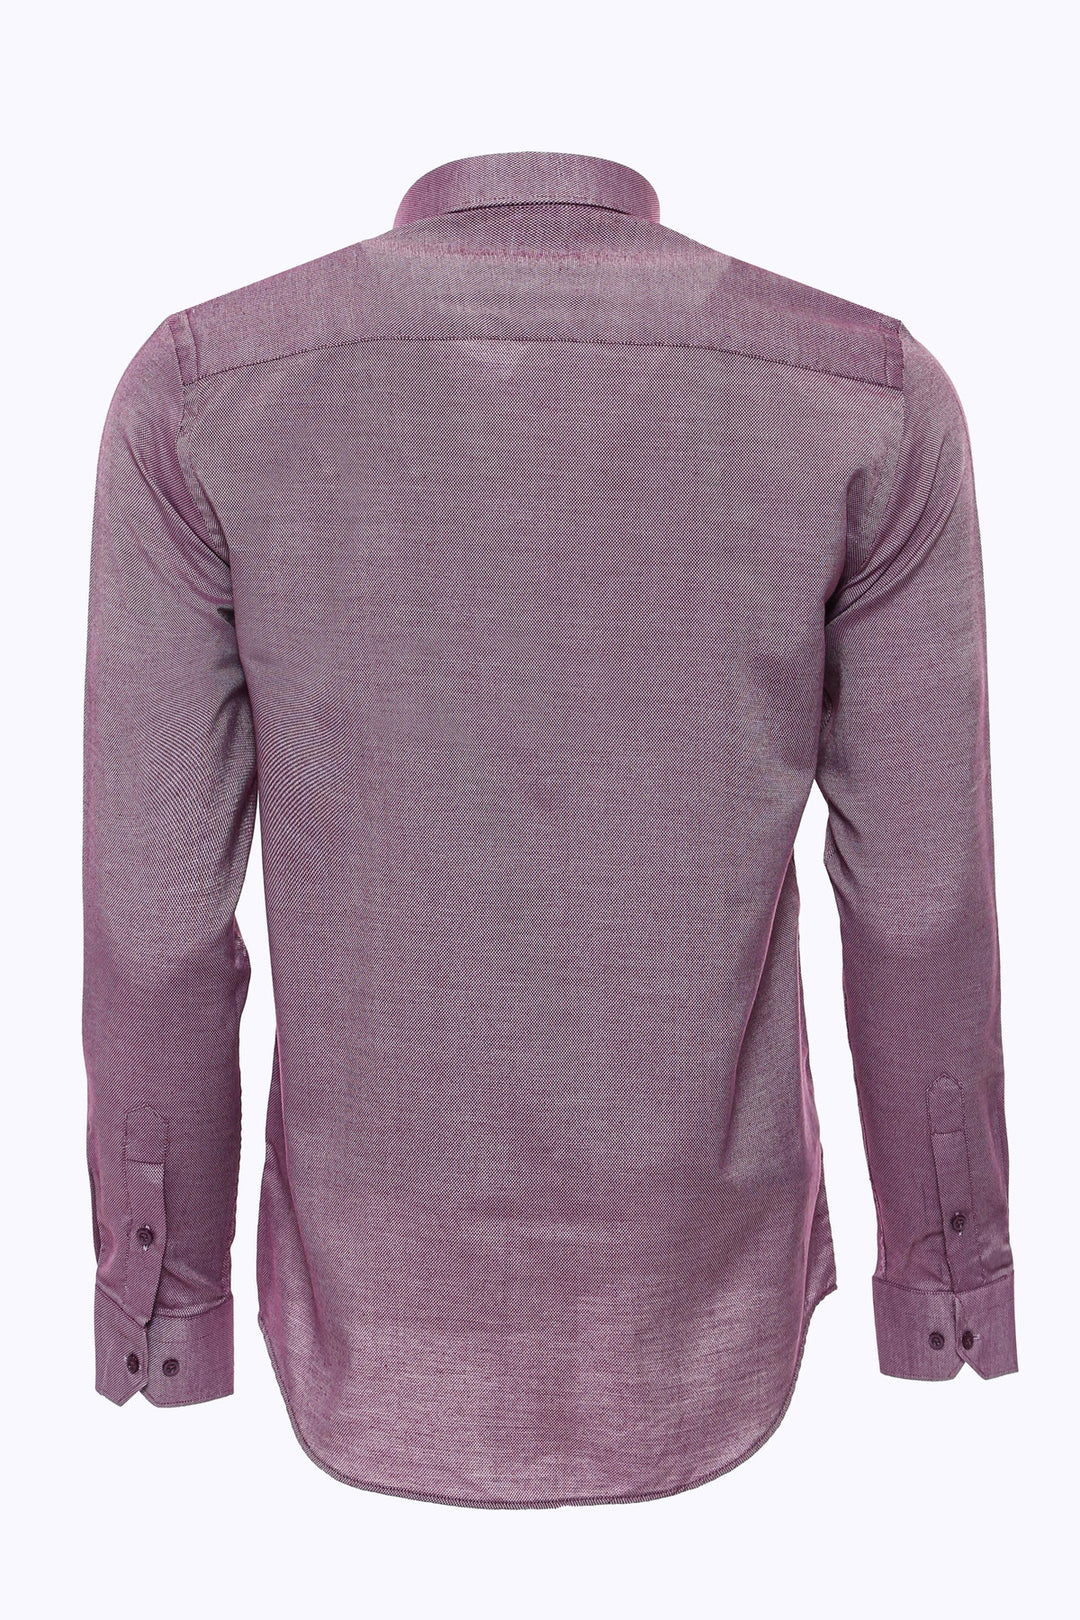 Burgundy Patterned Long Sleeve Shirt - Wessi